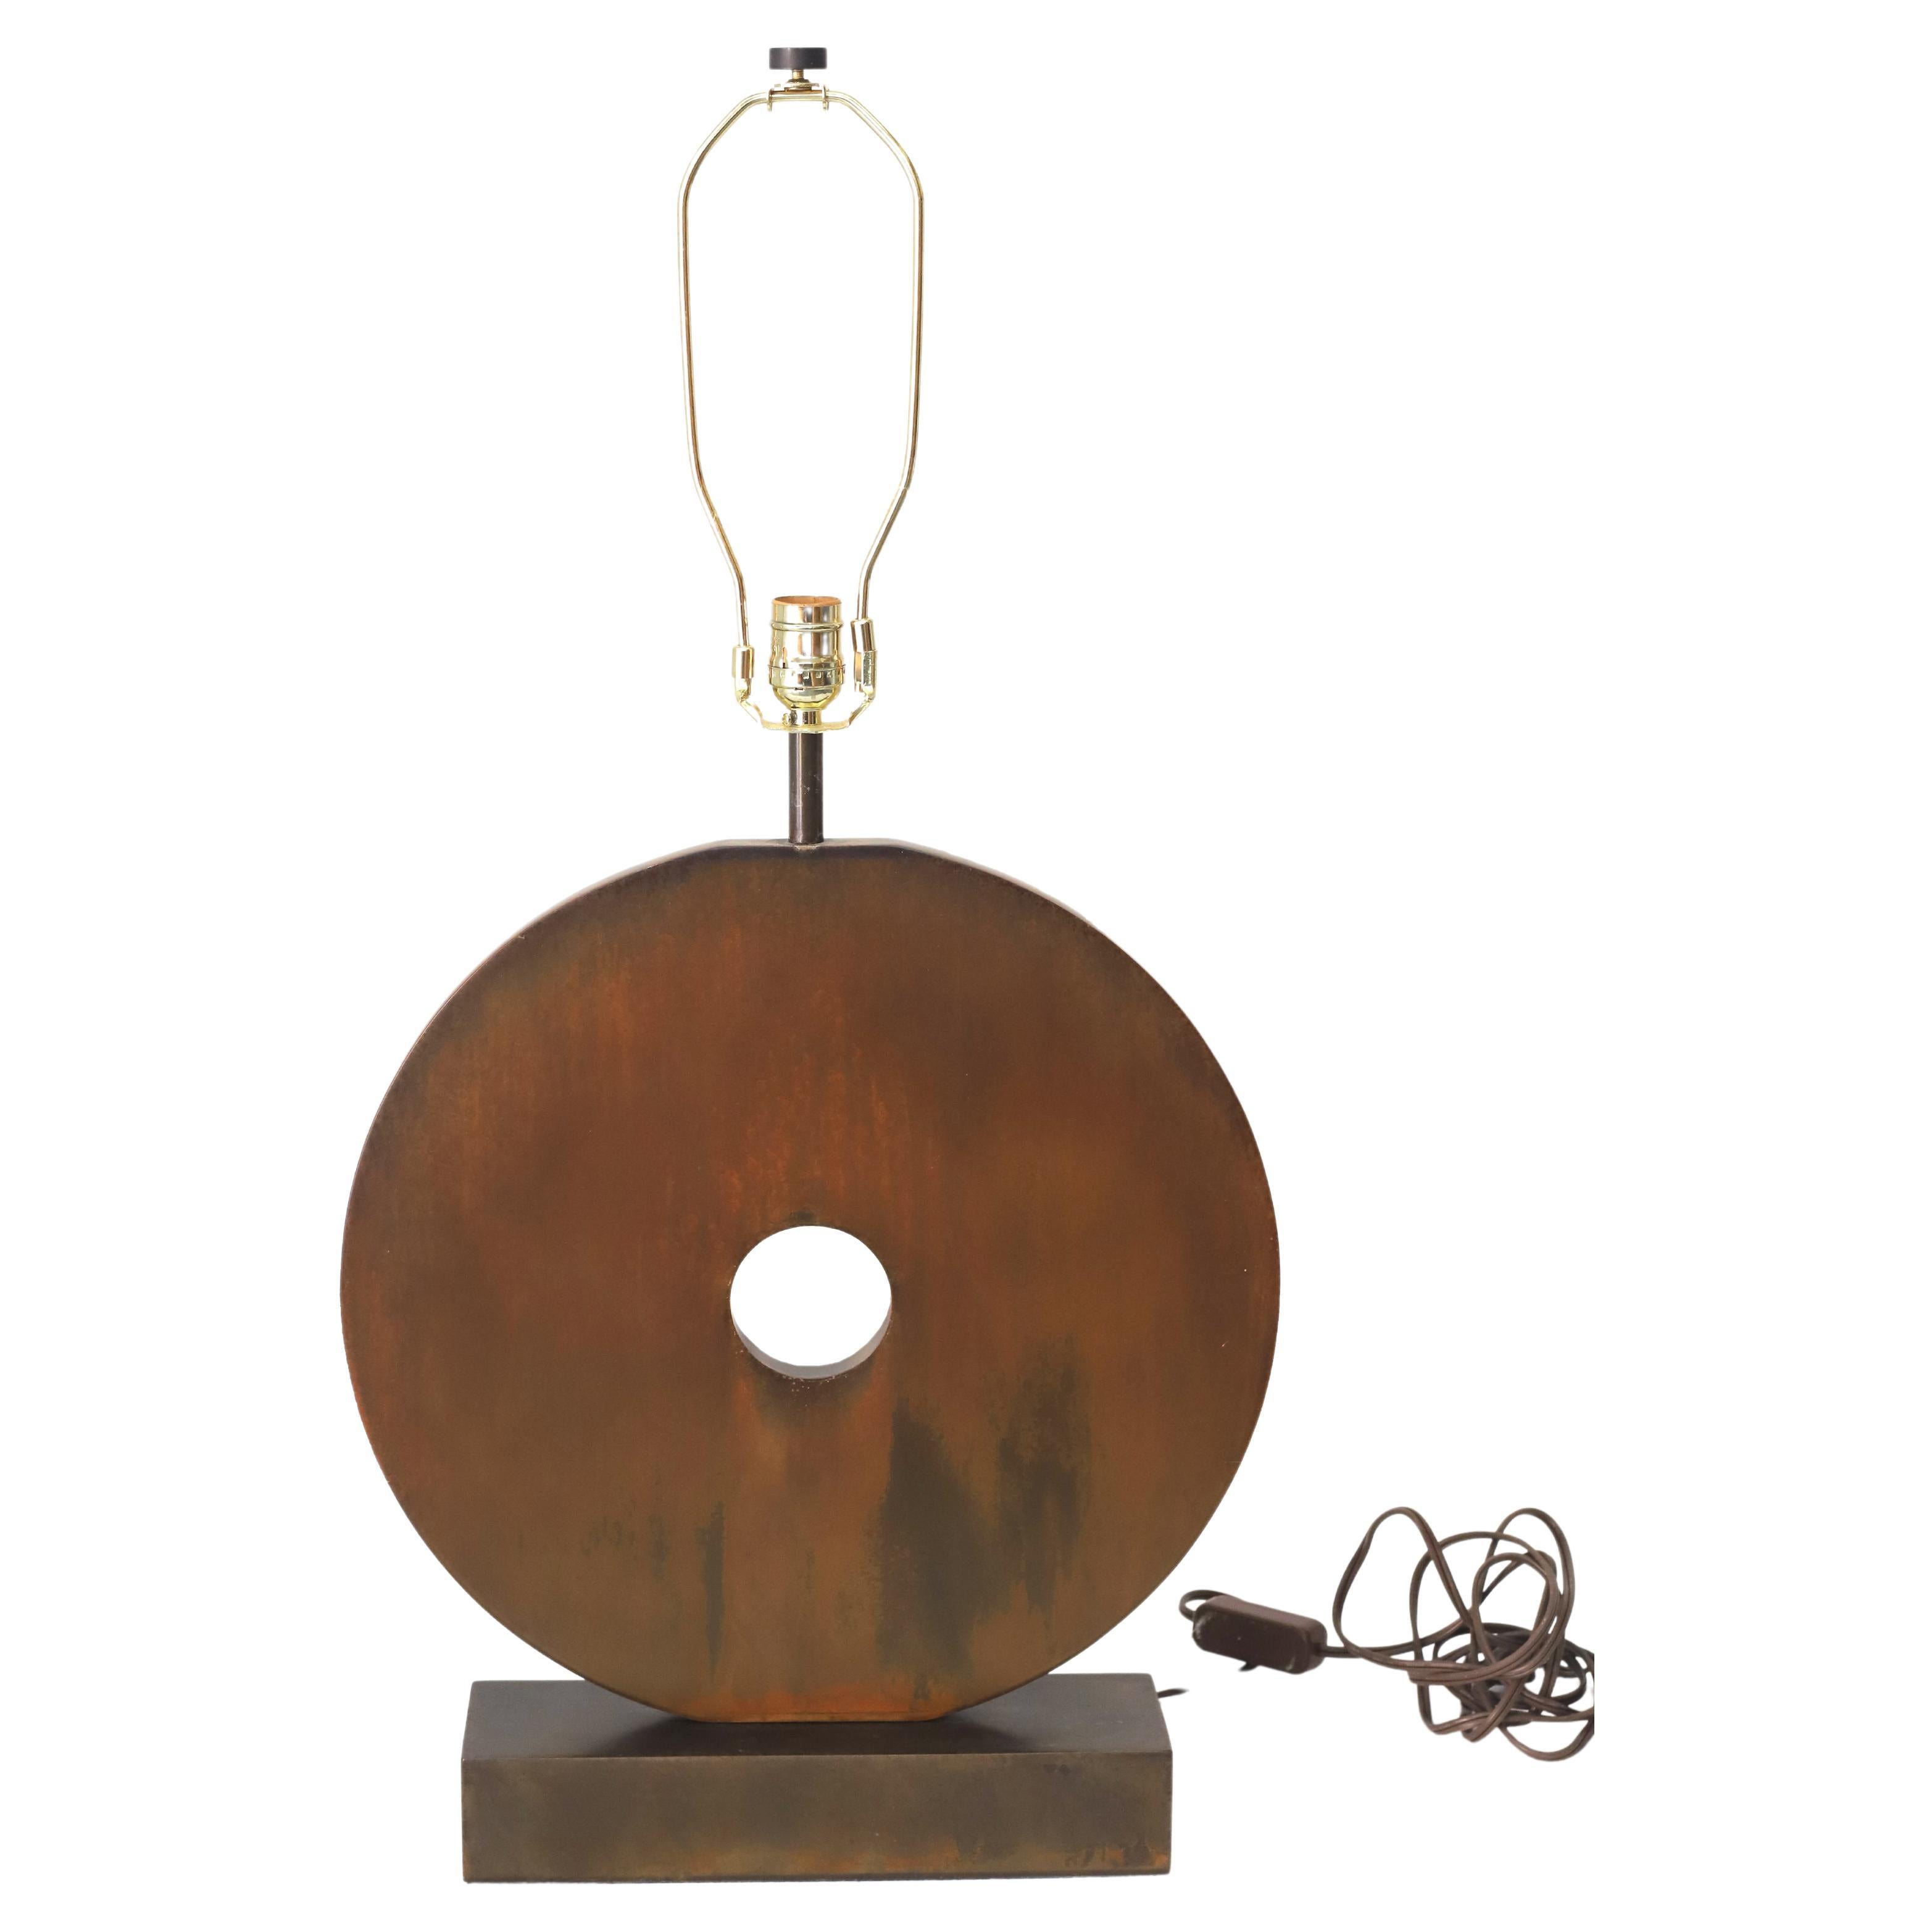 Circular Iron Lamp Designed by Juan Montoya